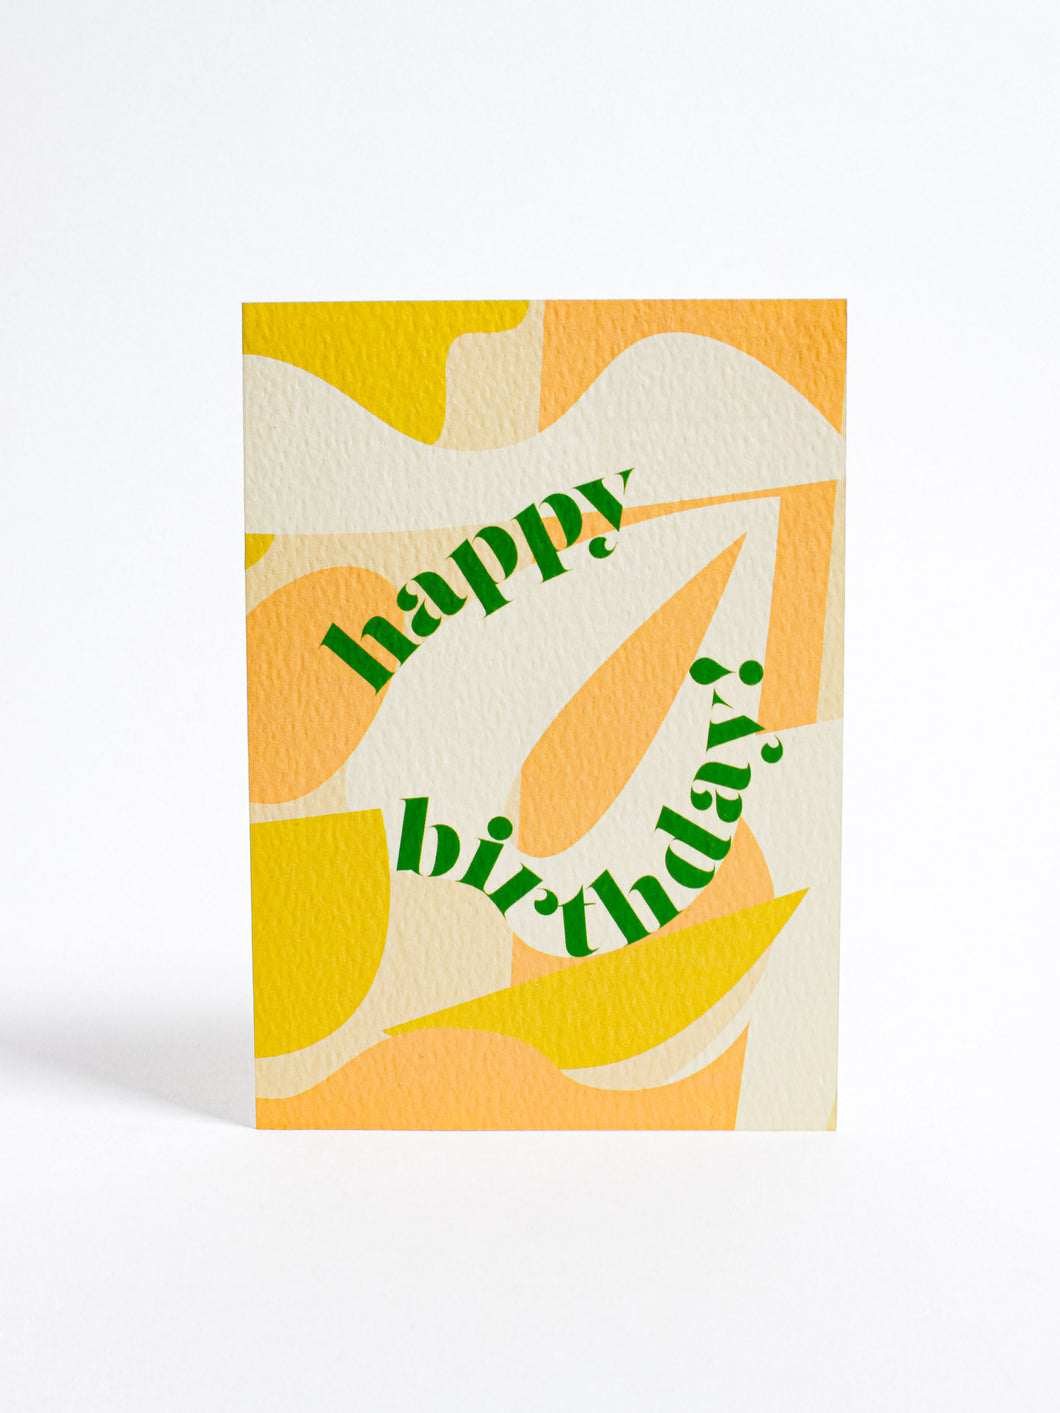 Happy Birthday! Madison Card - The Completist - Berte